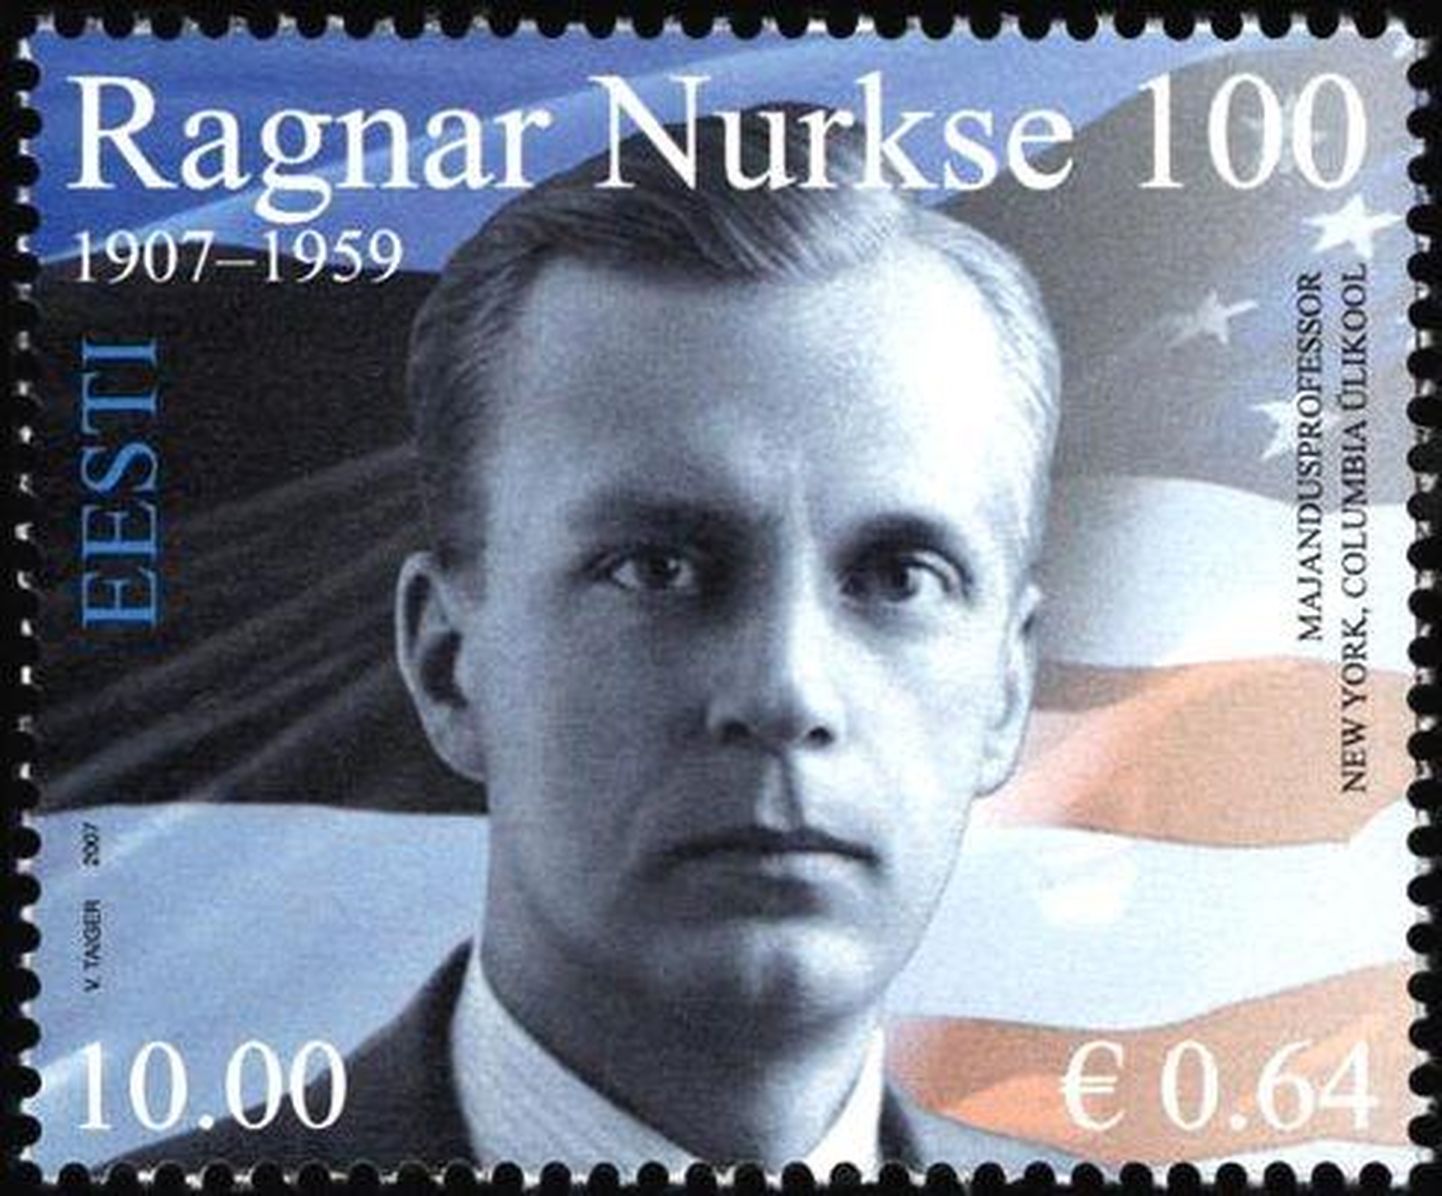 Ragnar Nurkse Eesti Vabariigi postmargil.